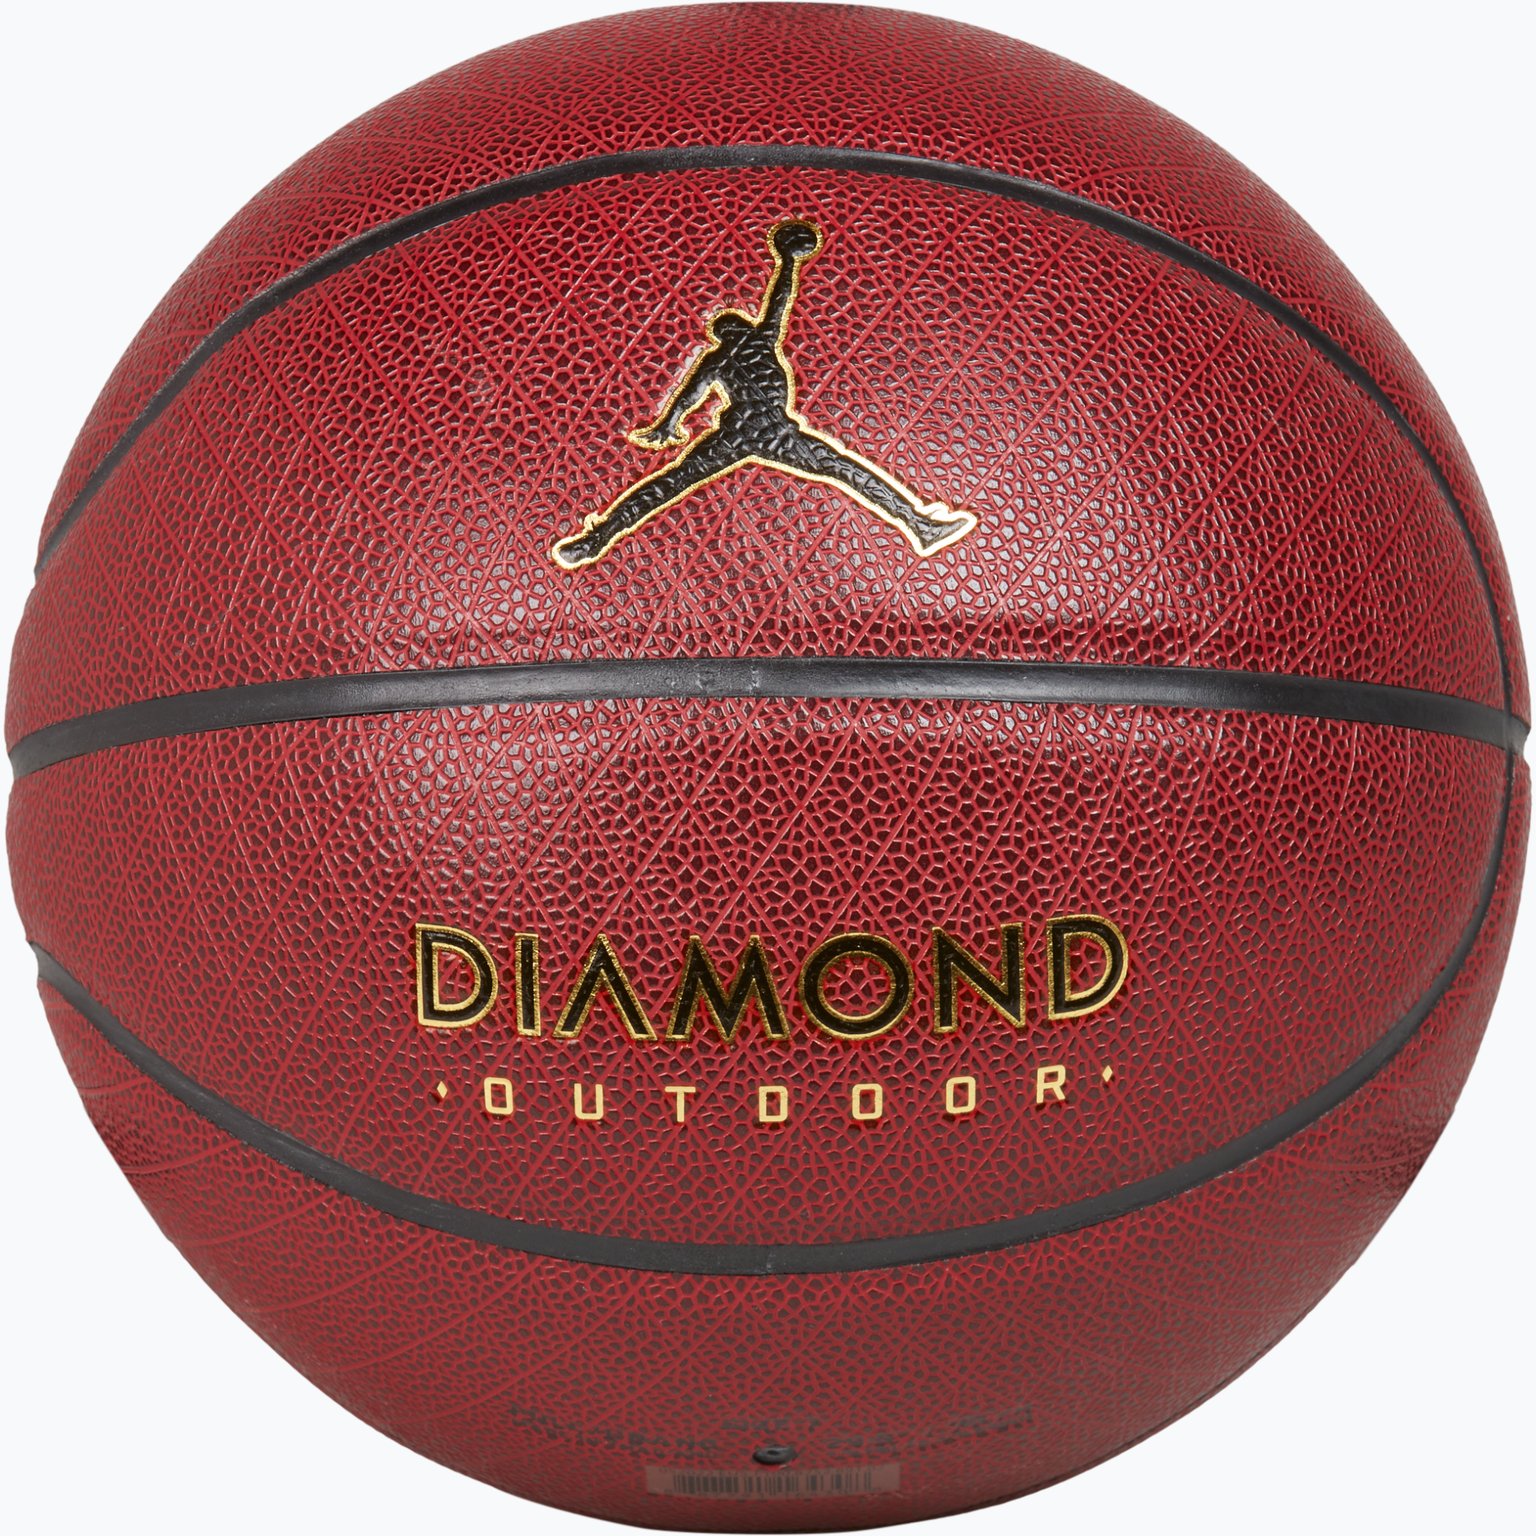 Jordan Diamond Outdoor basketboll